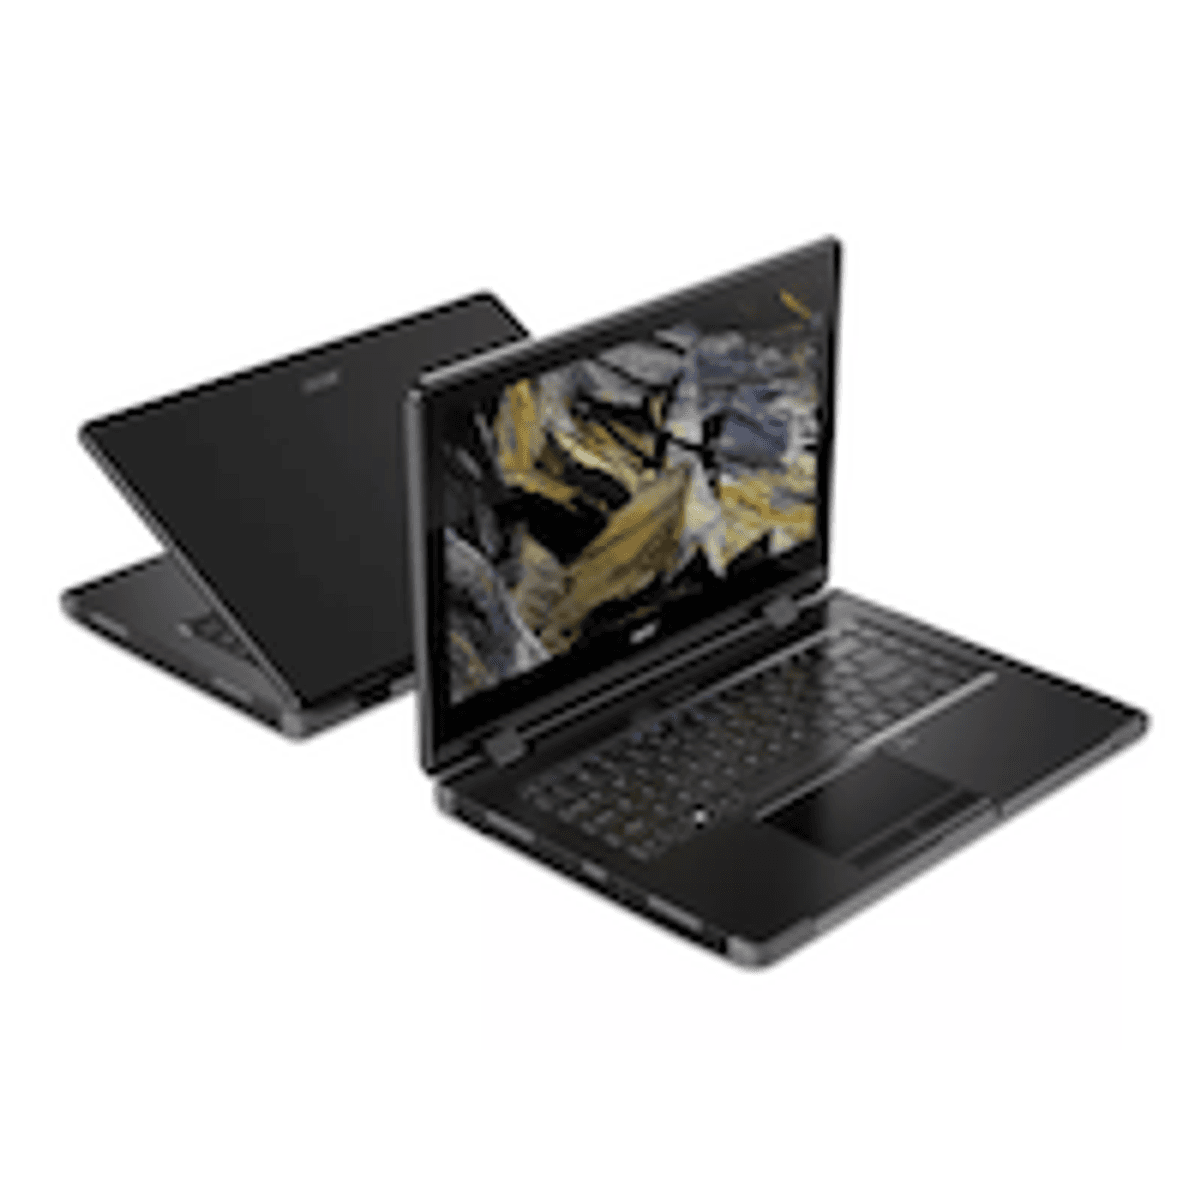 Acer introduceert Enduro-lijn notebooks en tablets image